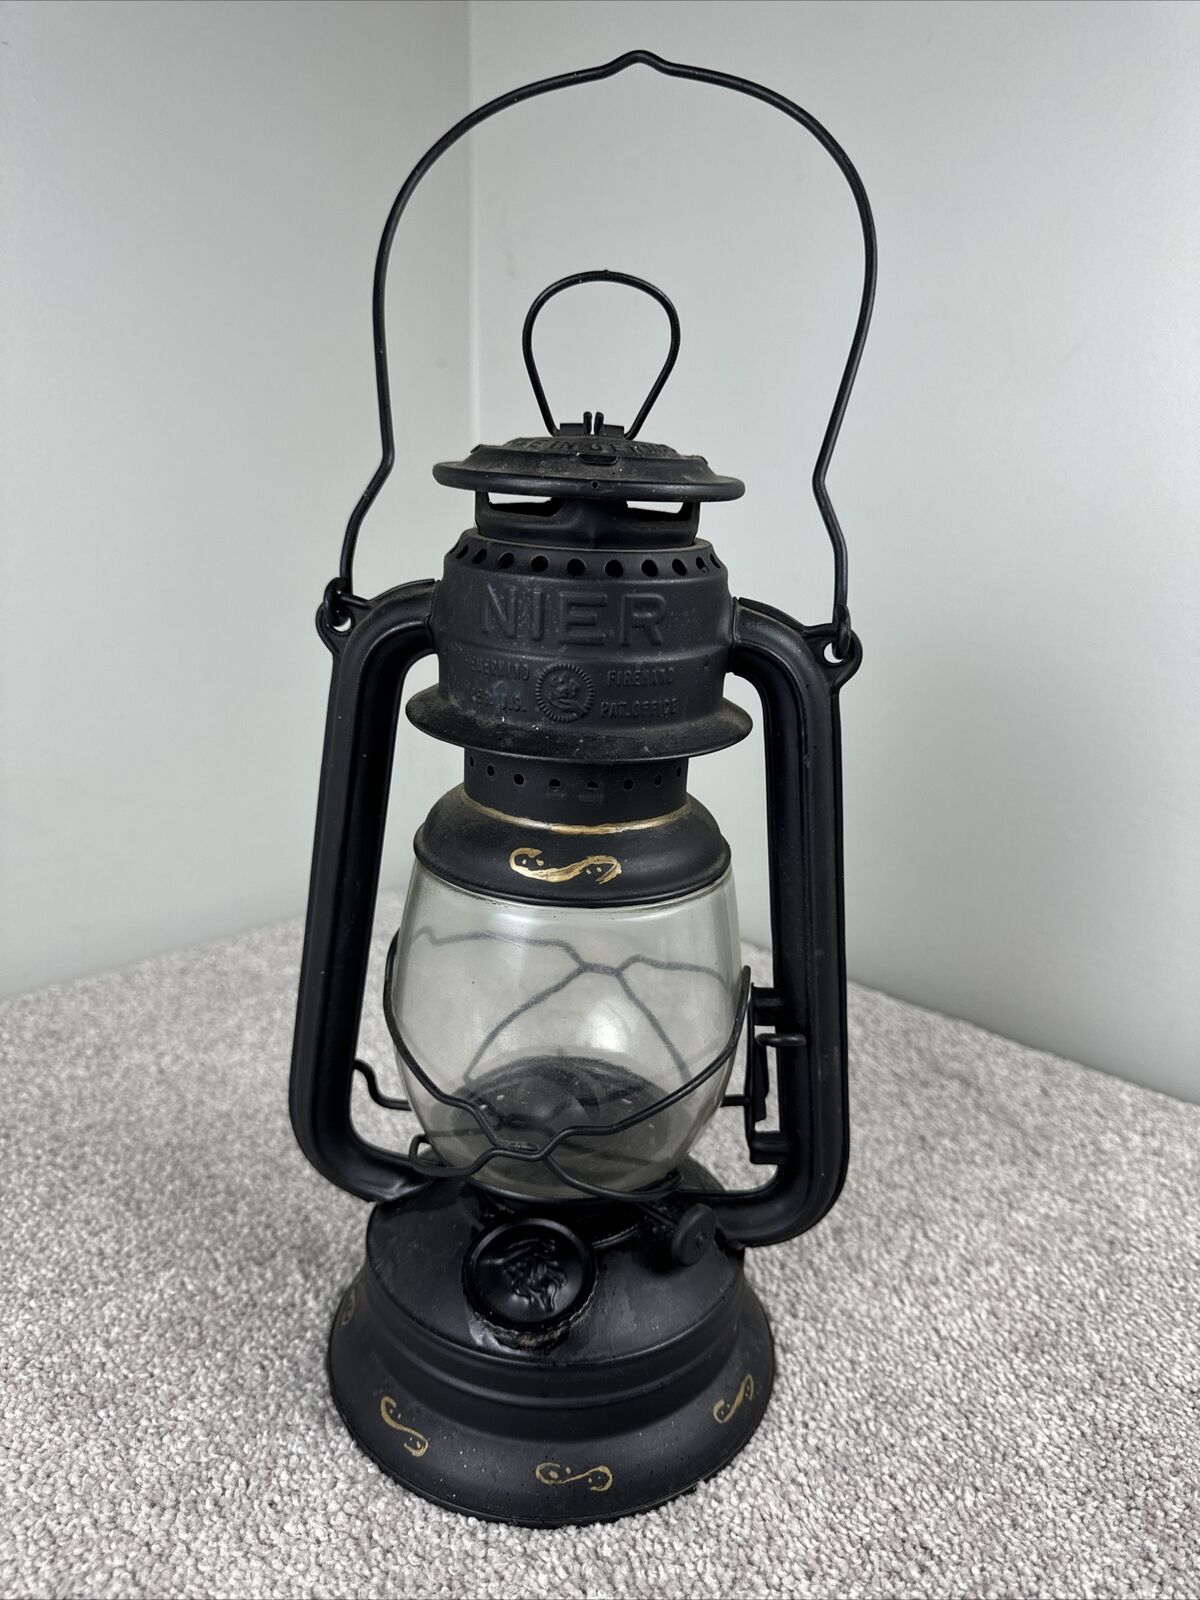 Antique Nier No. 270 Firehand Kerosene Lantern Made In Germany